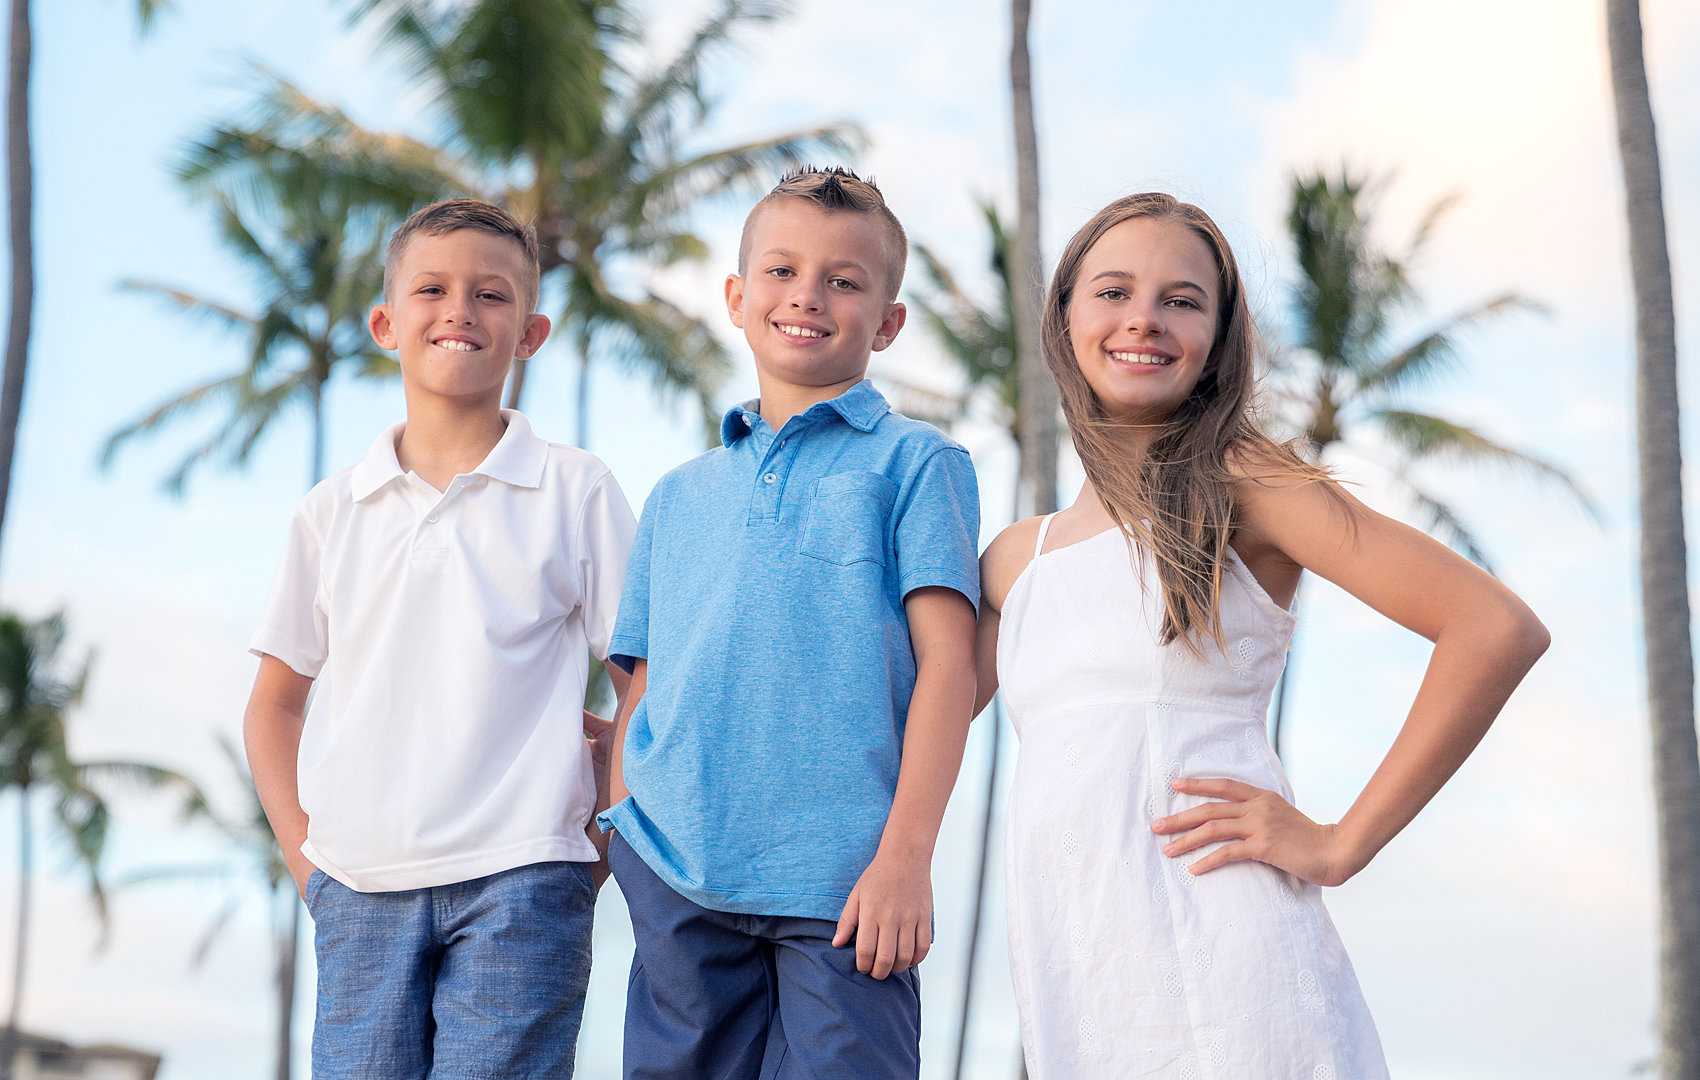 Maui family photographers | Kauai family photographers |  Oahu family photographers | Big Island family photographers